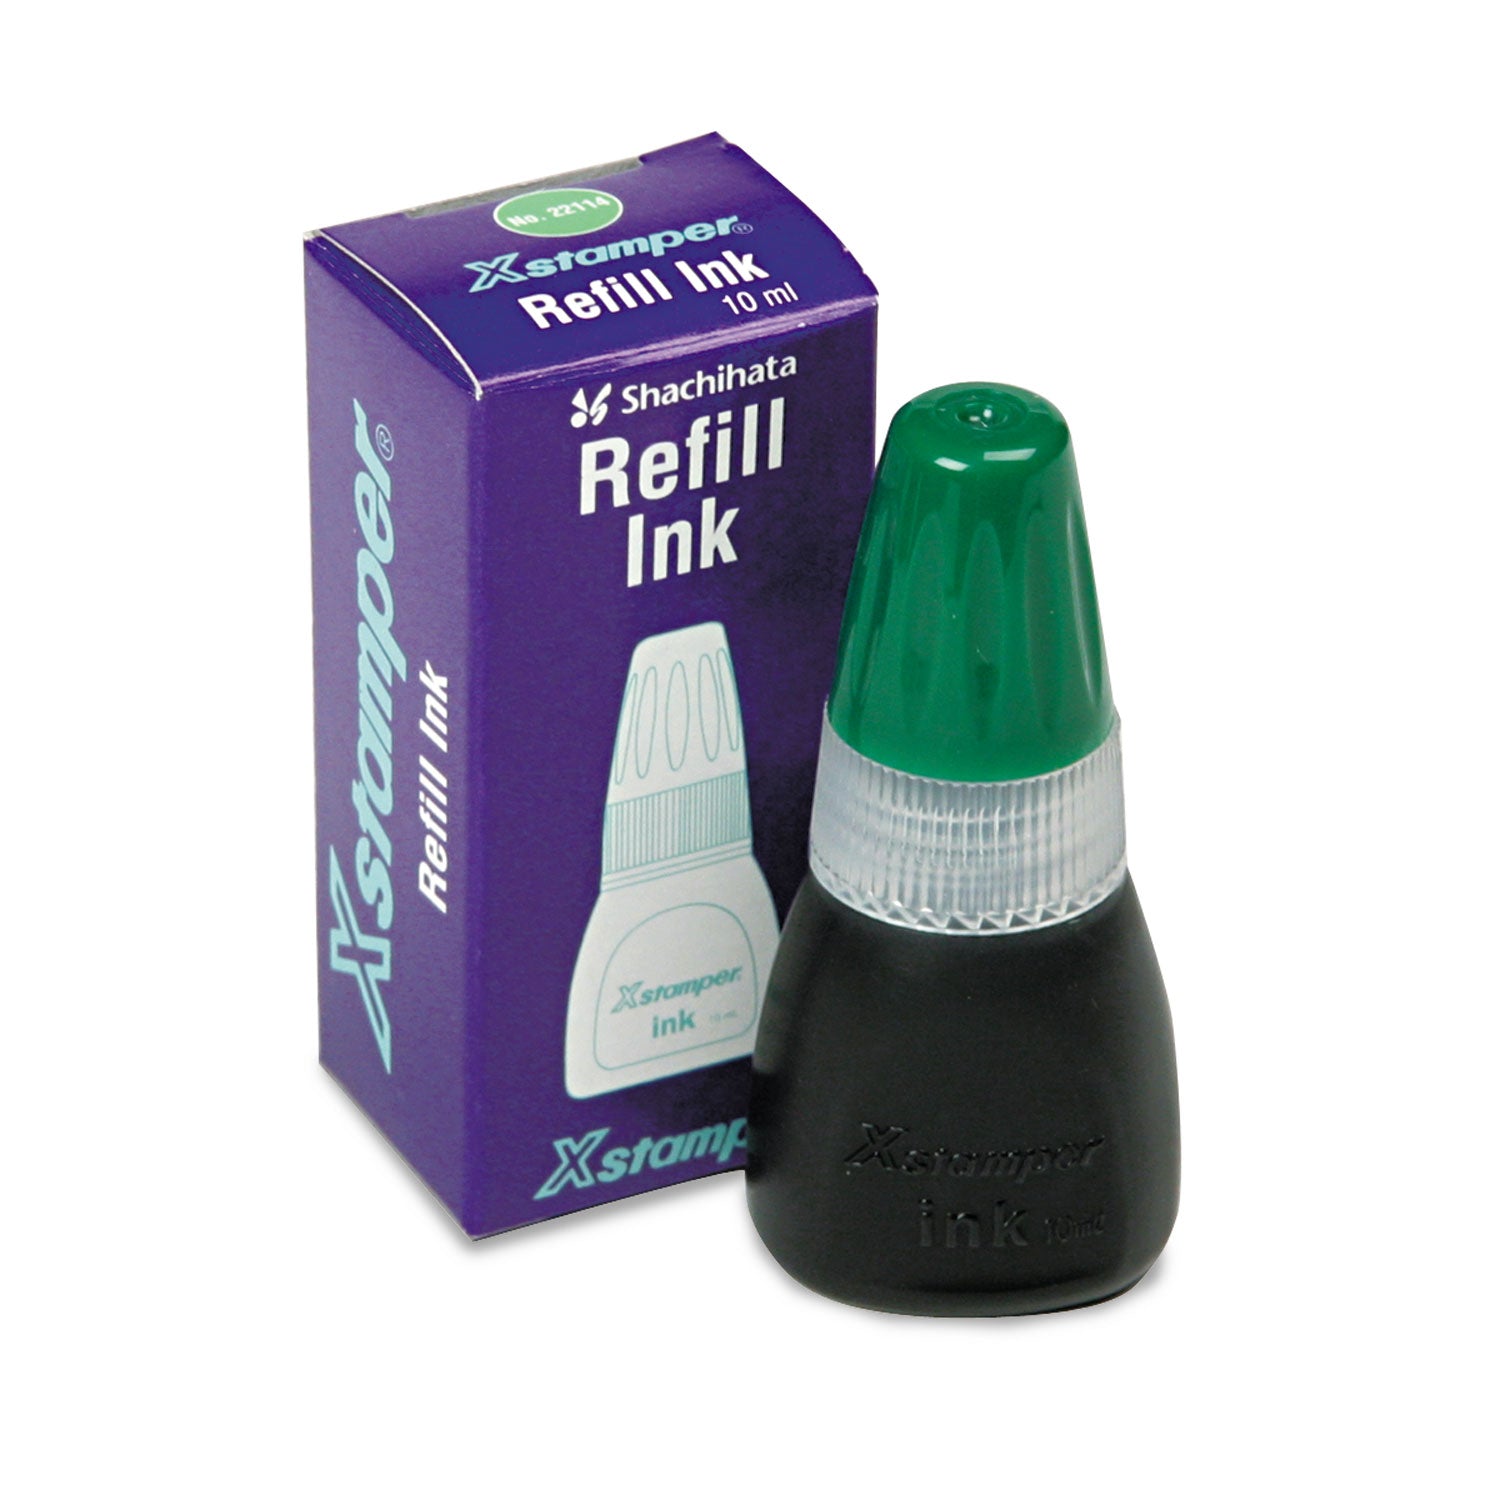 Refill Ink for Xstamper Stamps, 10 mL Bottle, Green - 